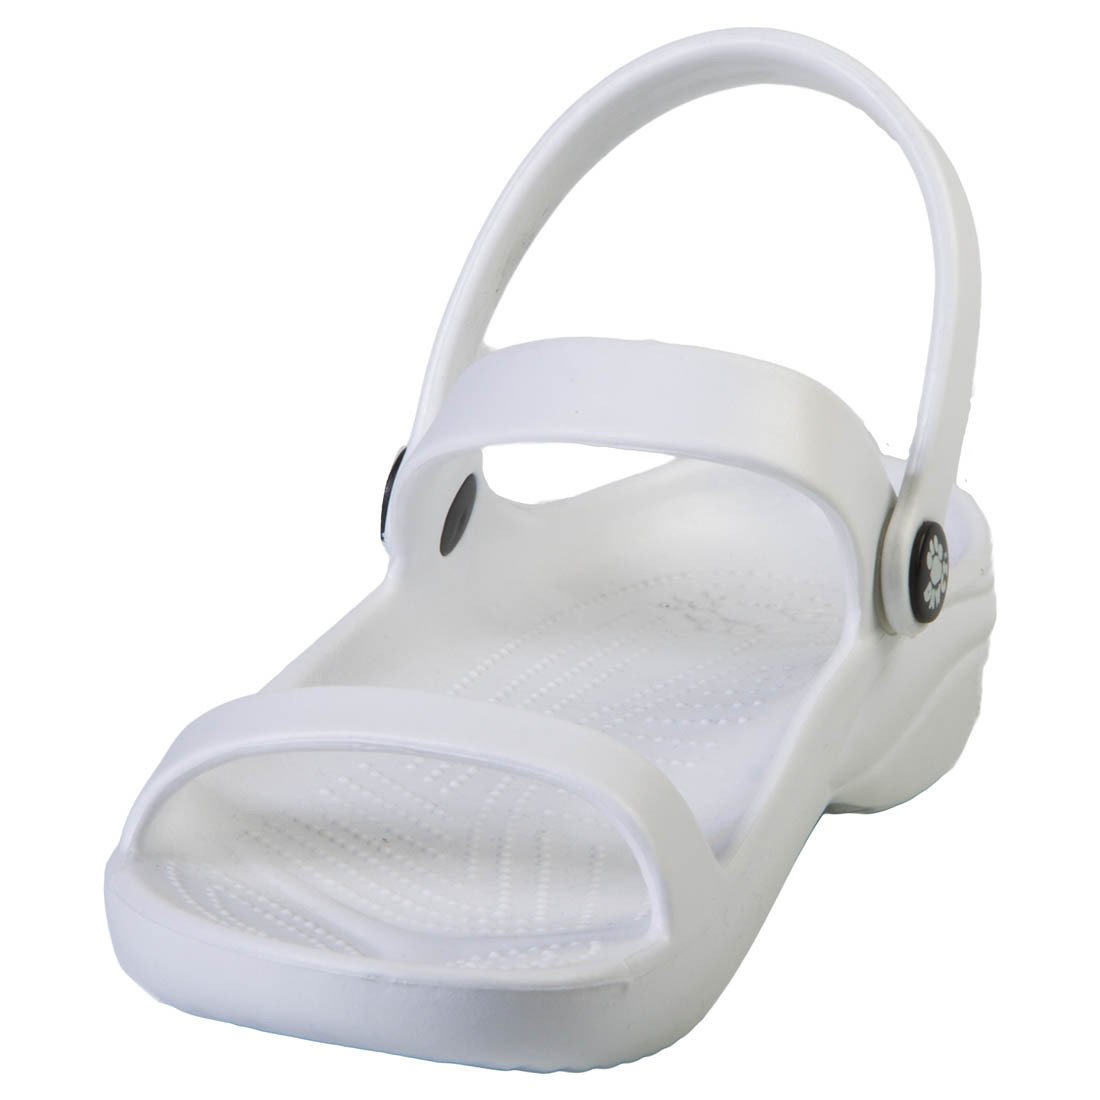 Women's 3-Strap Sandals - White by DAWGS USA